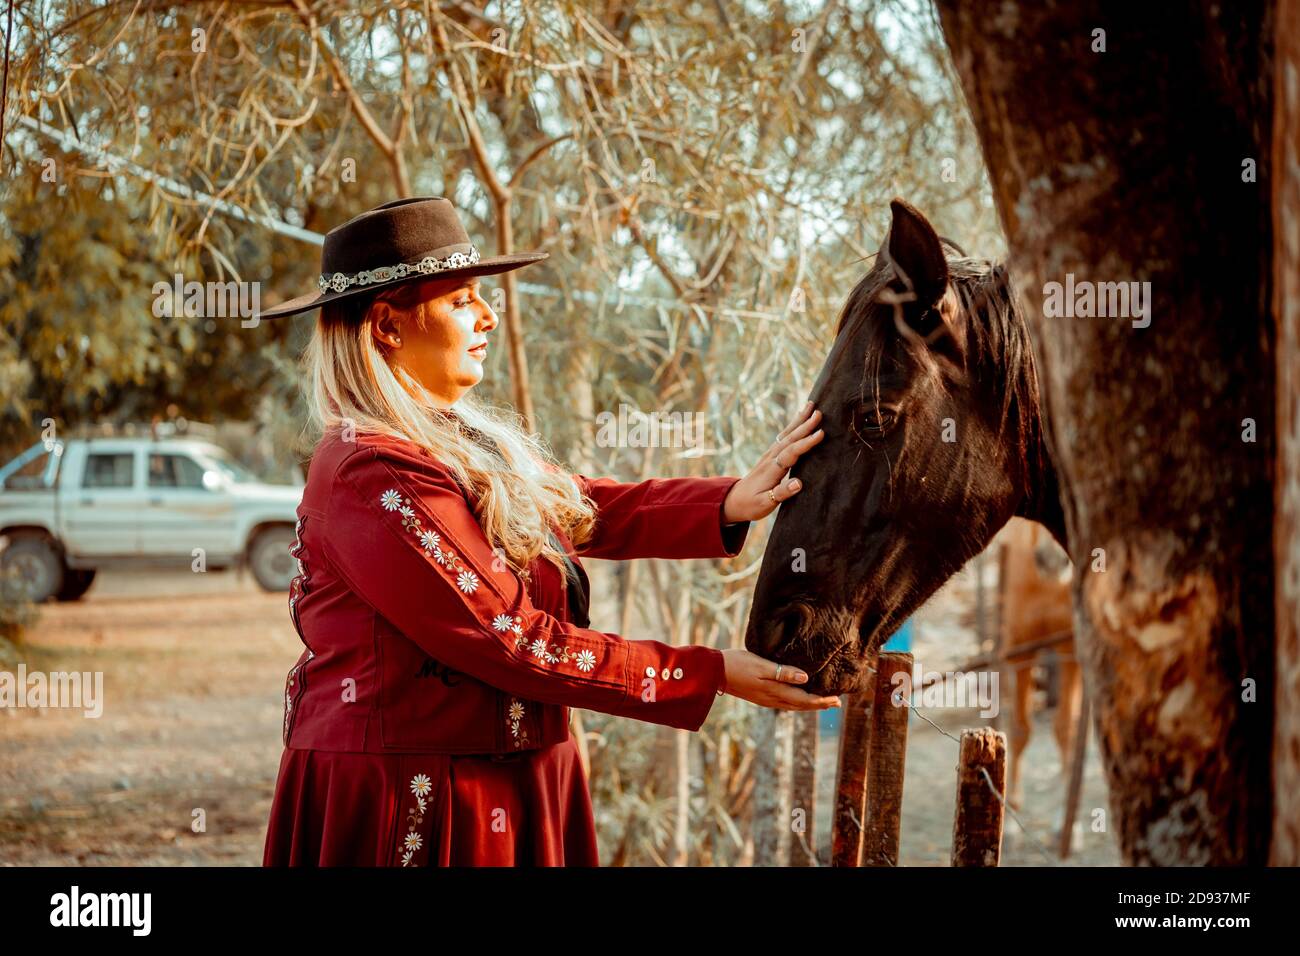 Beautifull argentinian girl with gaucho costume Stock Photo